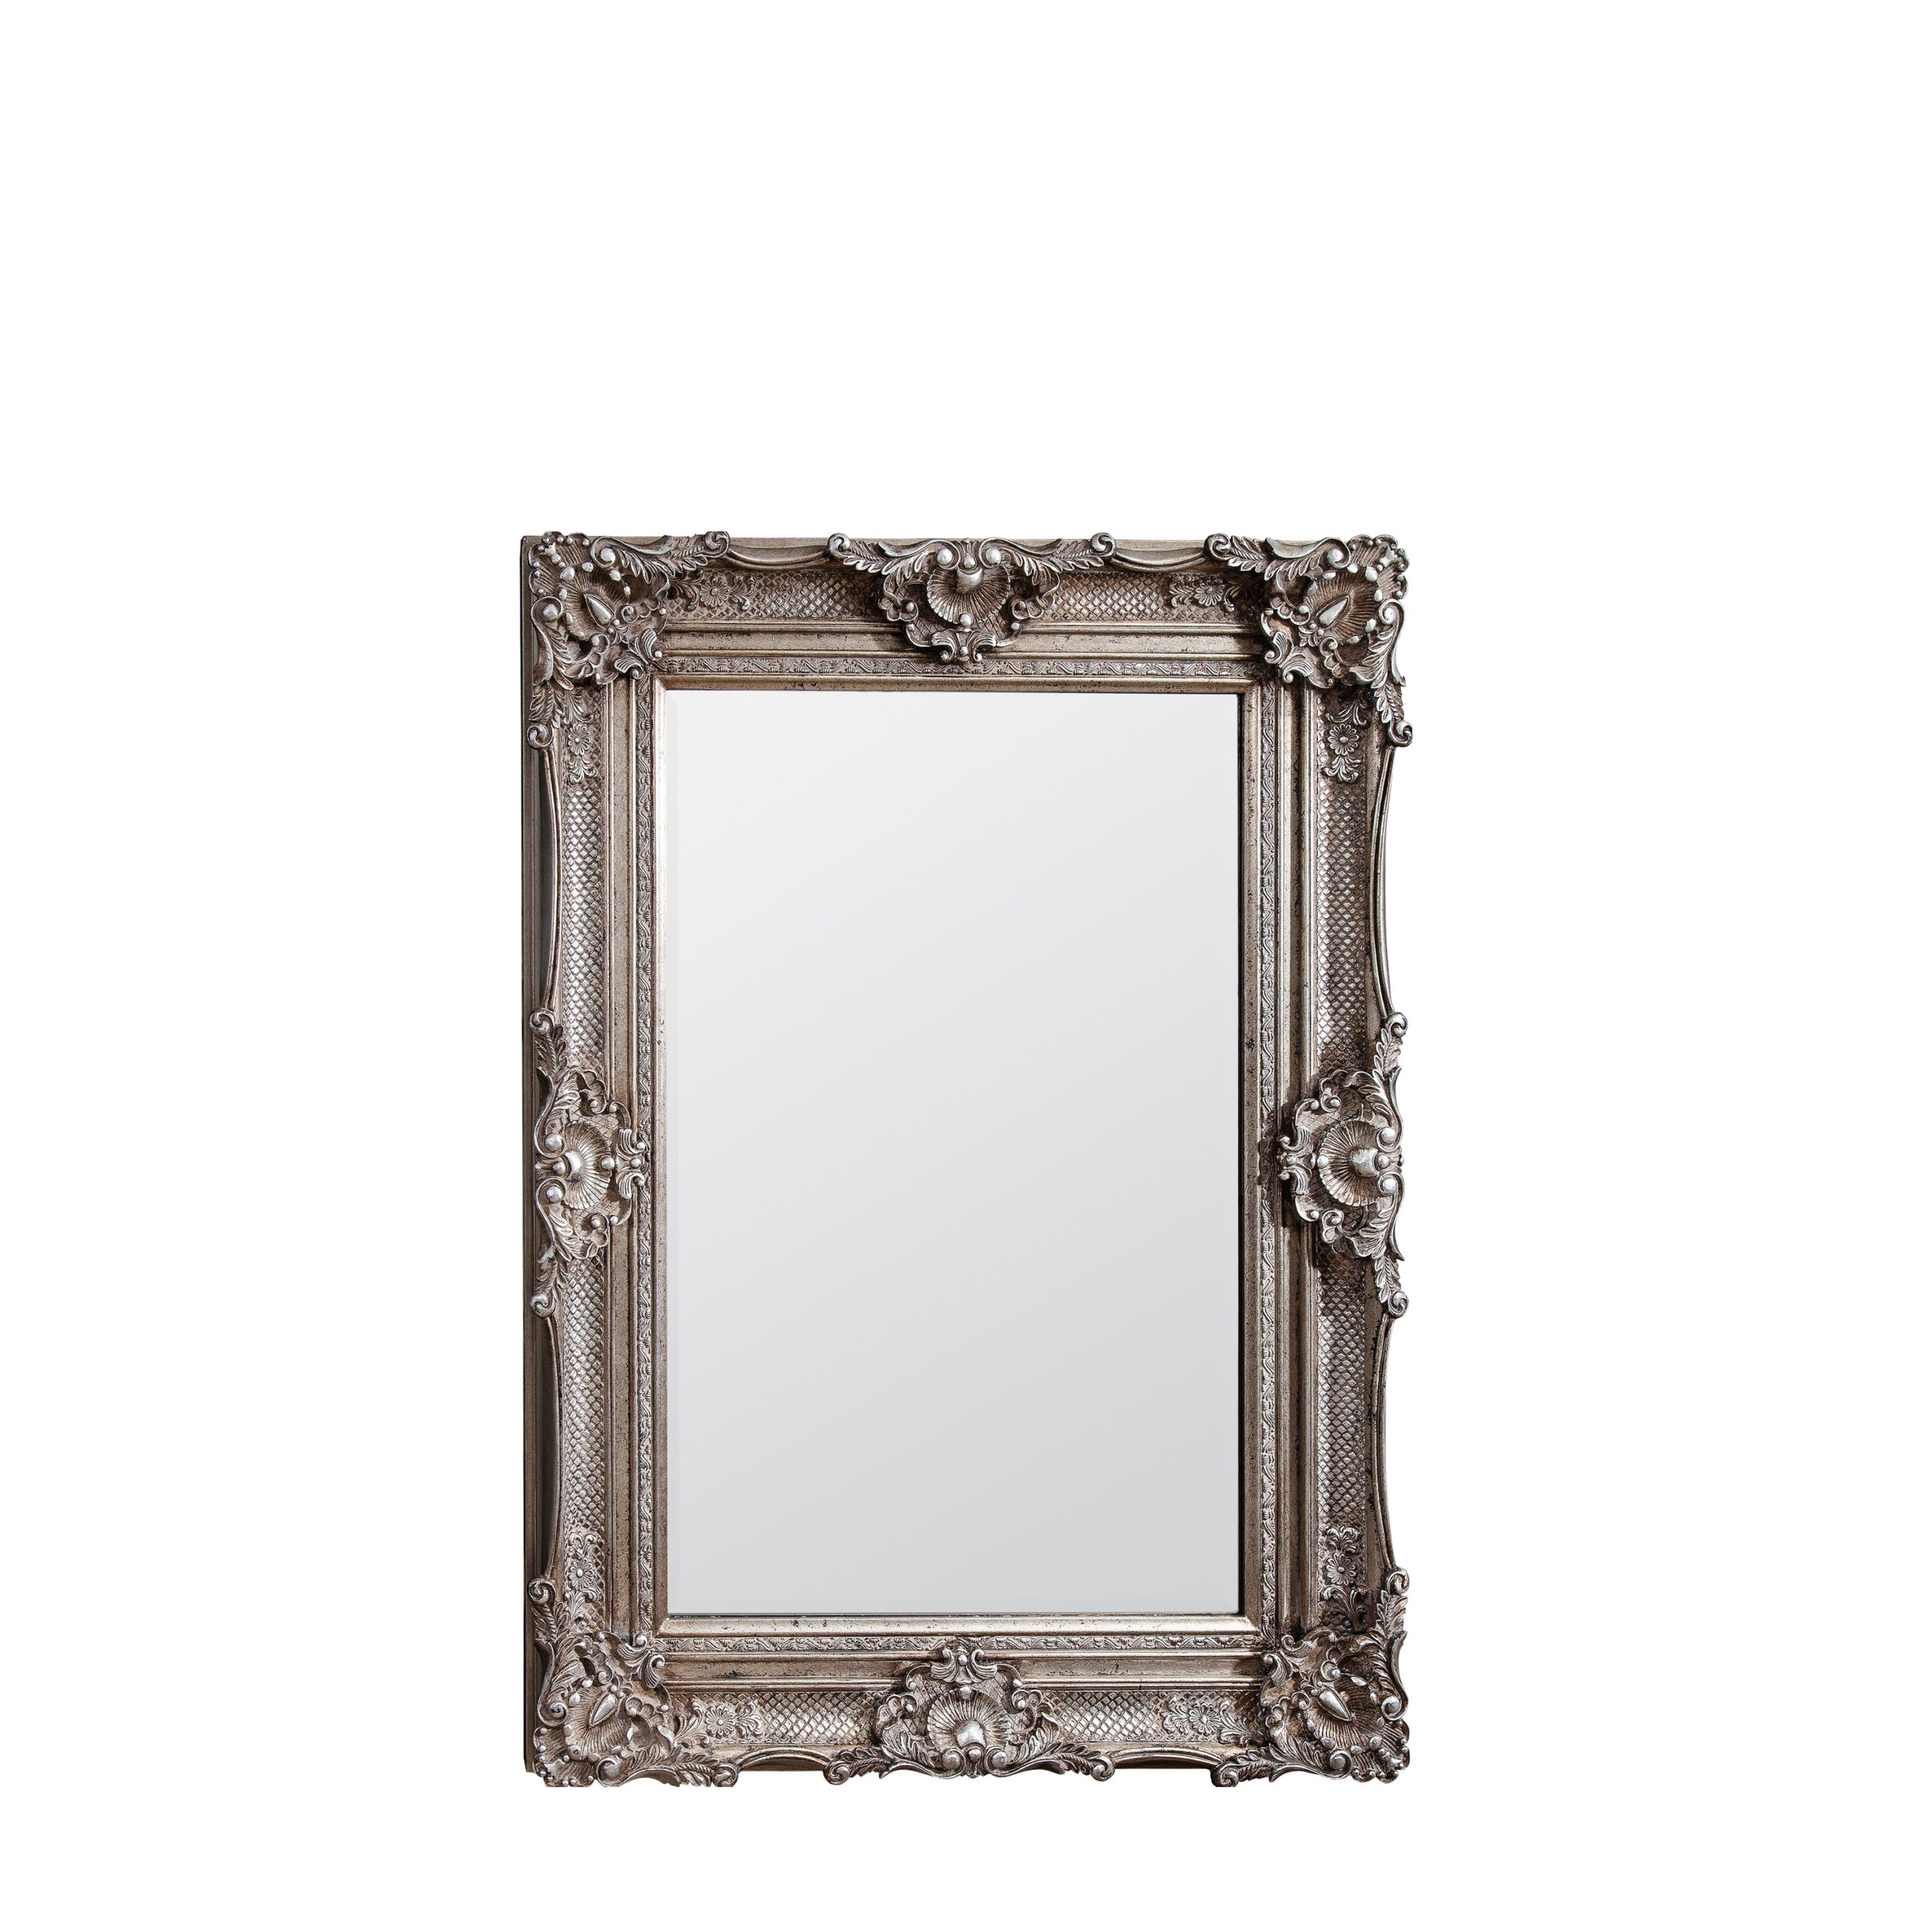 Gallery Direct Stretton Rectangle Mirror Silver